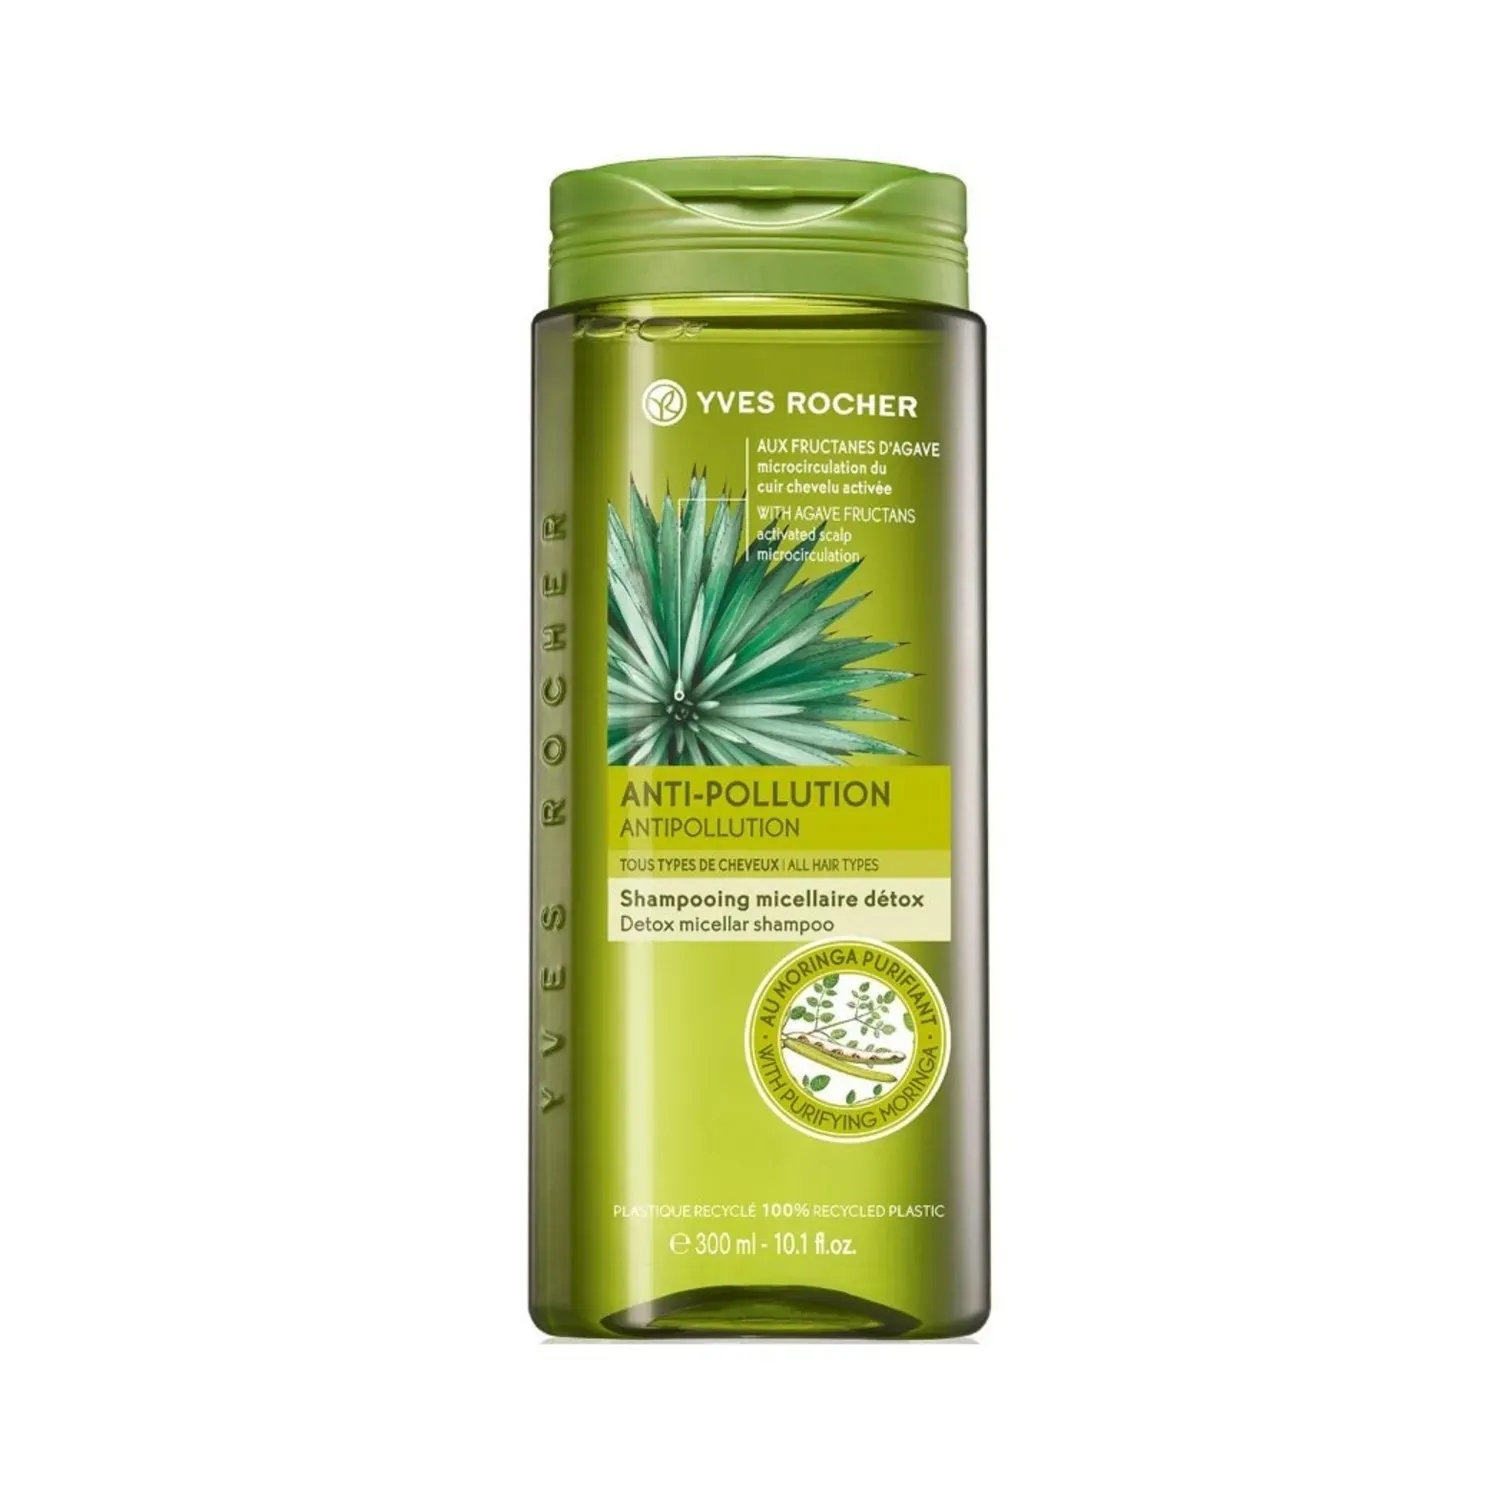 Yves Rocher | Yves Rocher Anti-Pollution Detox Miscellar Shampoo 300 ml